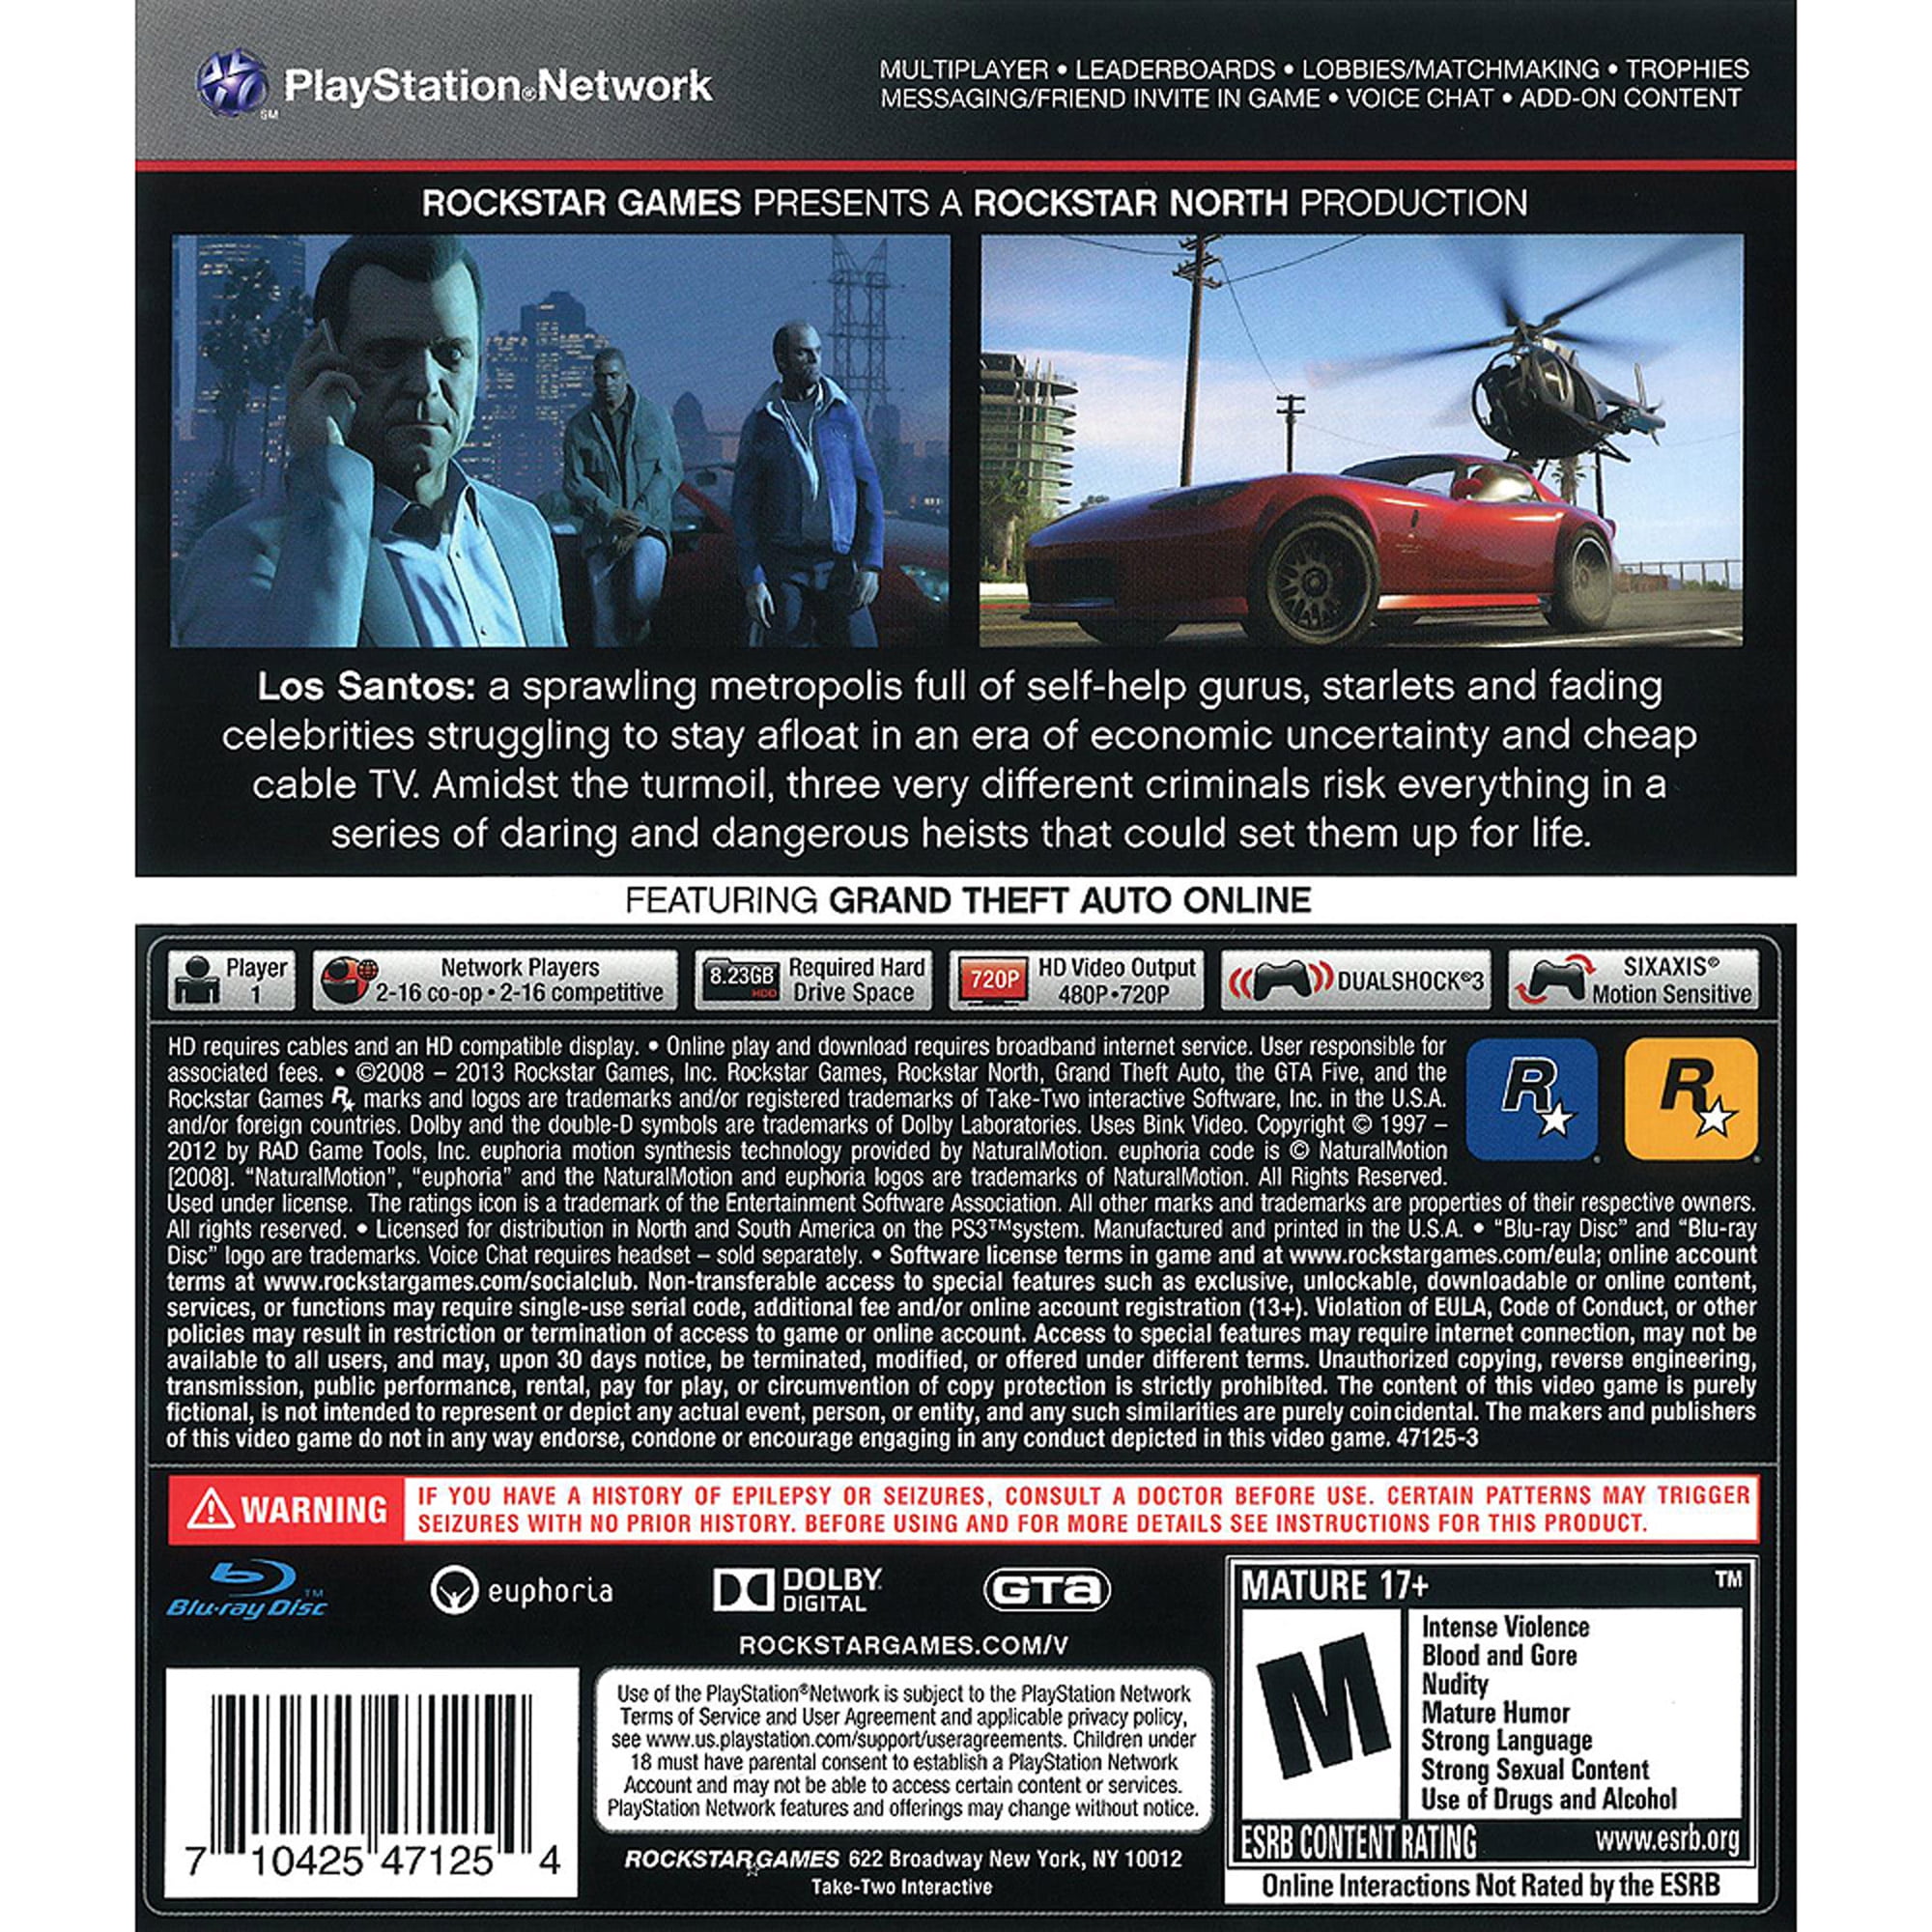 Grand Theft Auto V (PlayStation 3, 2013) PS3 - CIB W/ Map